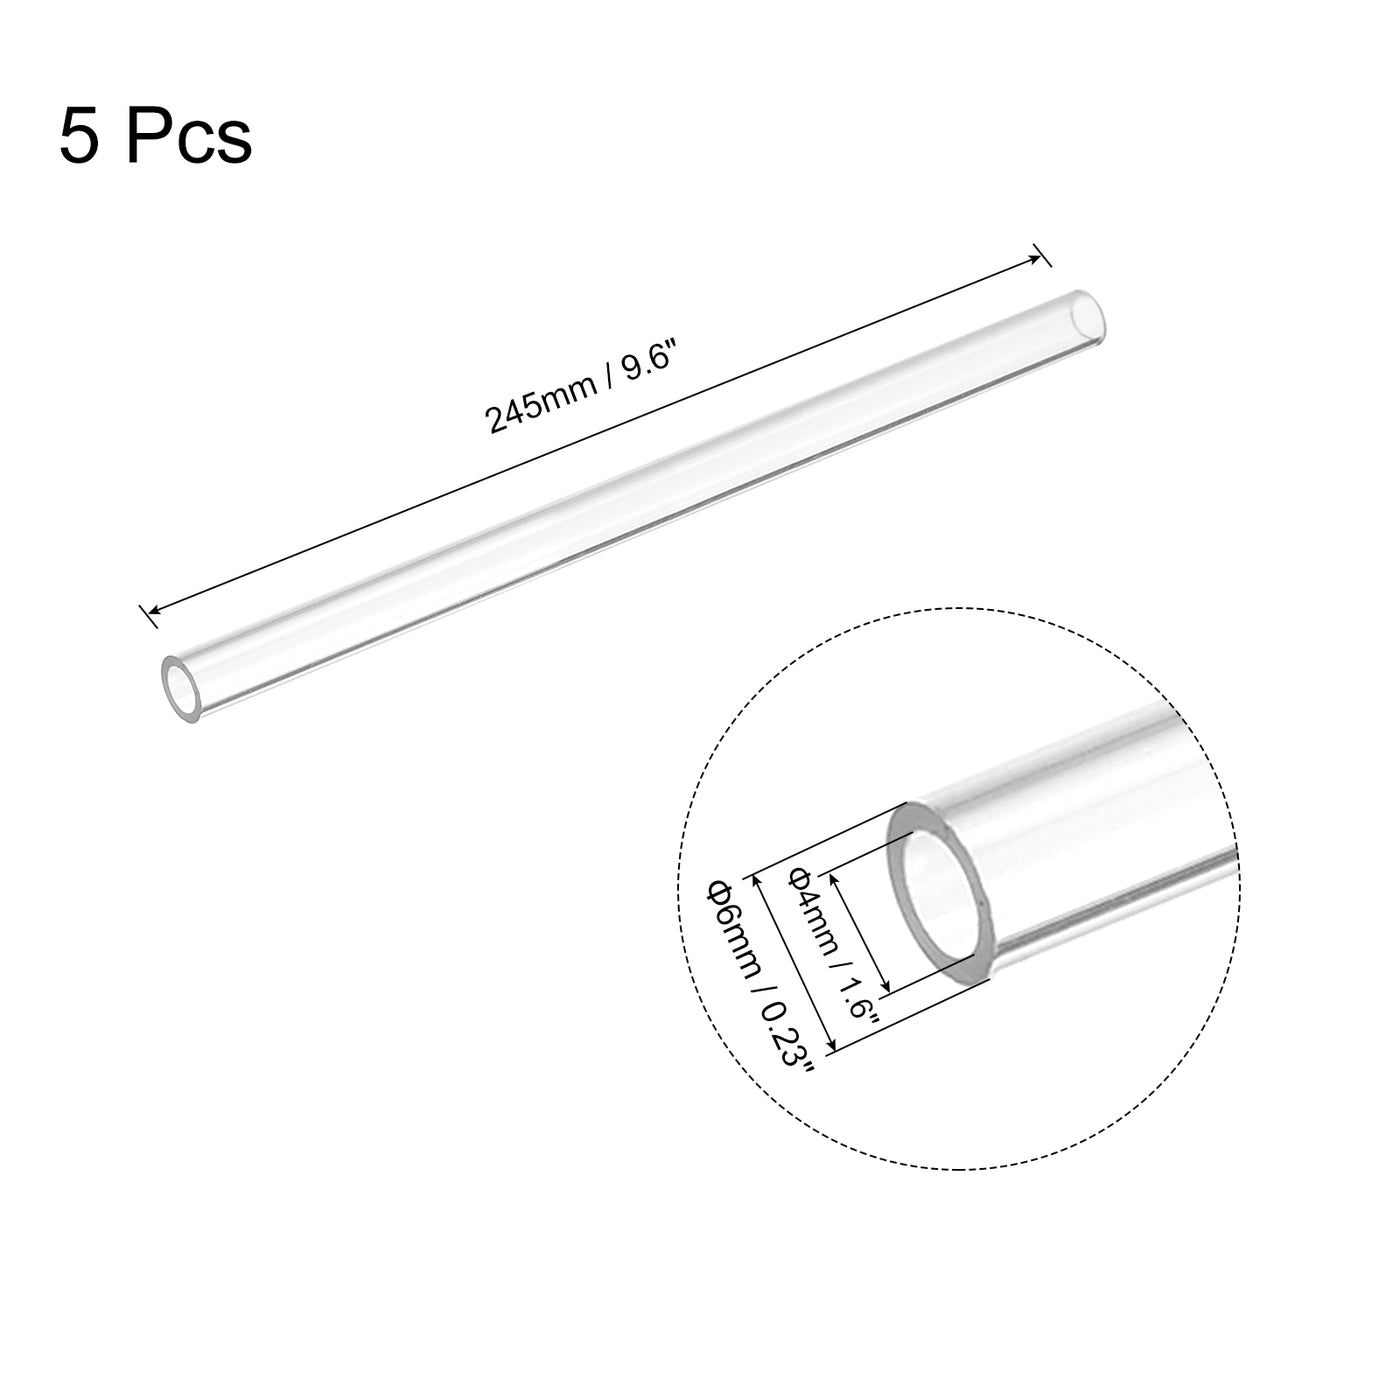 Harfington Plastic Pipe Rigid Polycarbonate Round Tube High Impact for Lighting Model, Water Plumbing